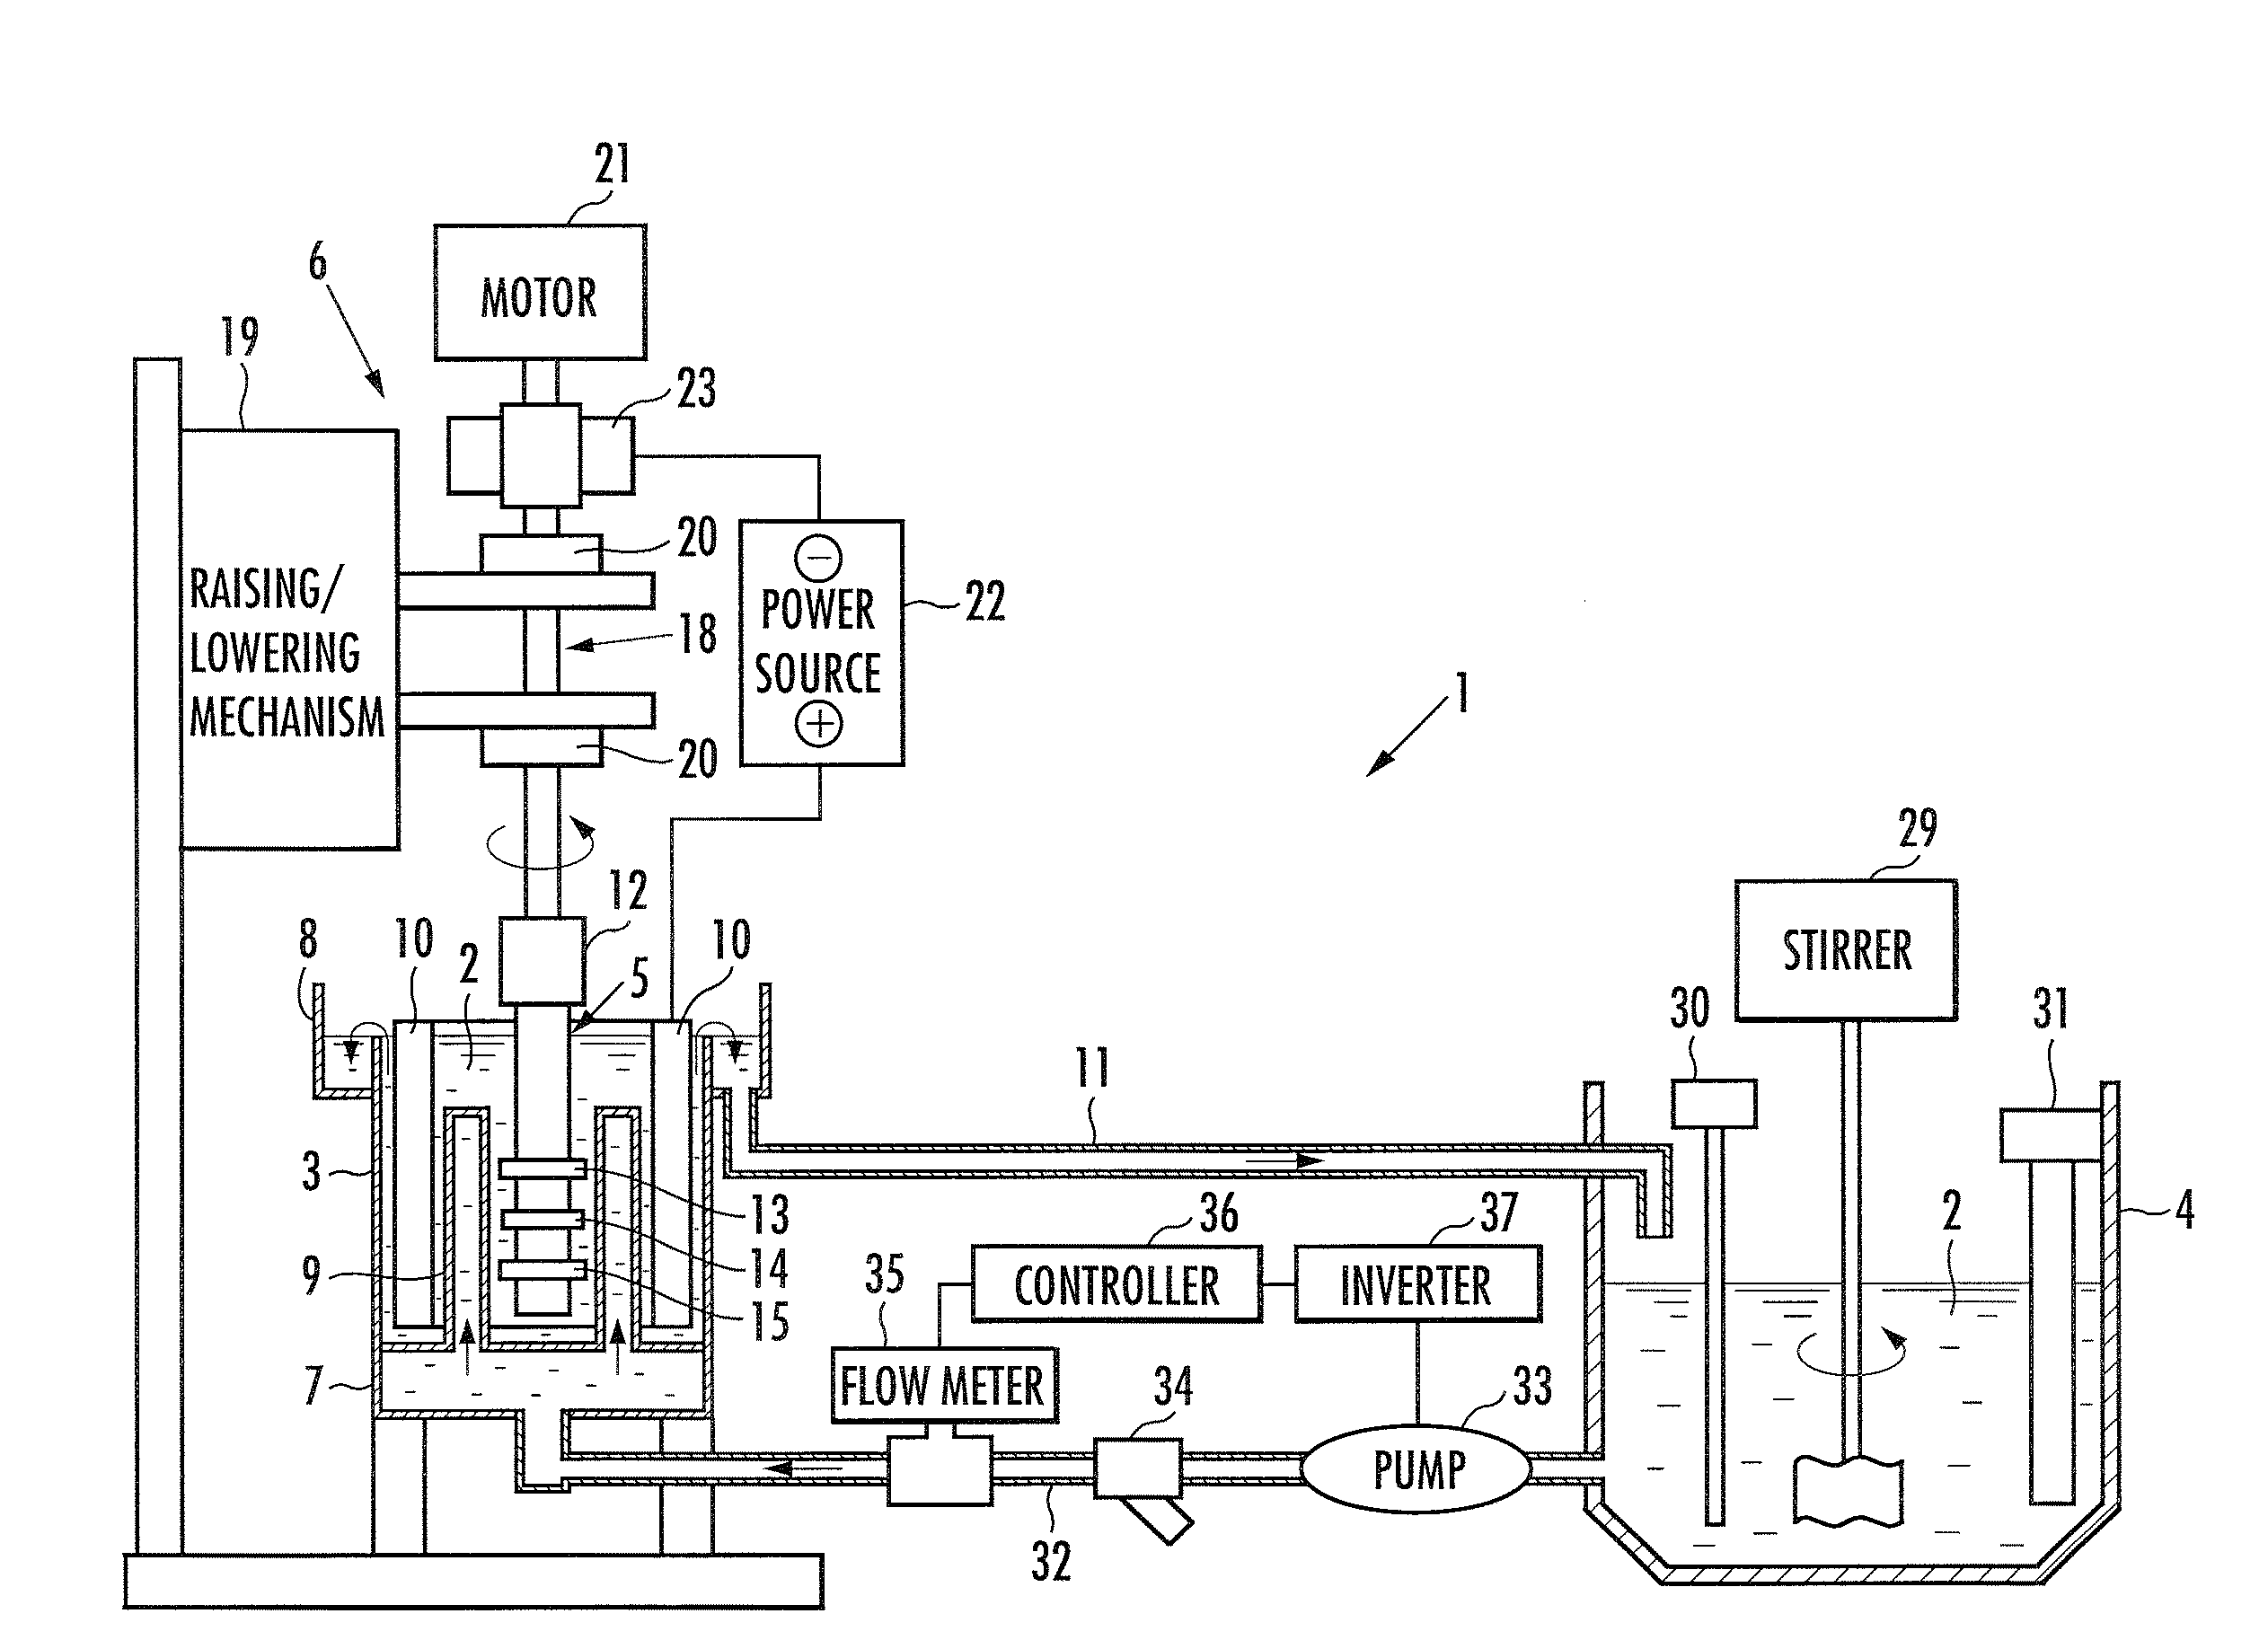 Plating apparatus